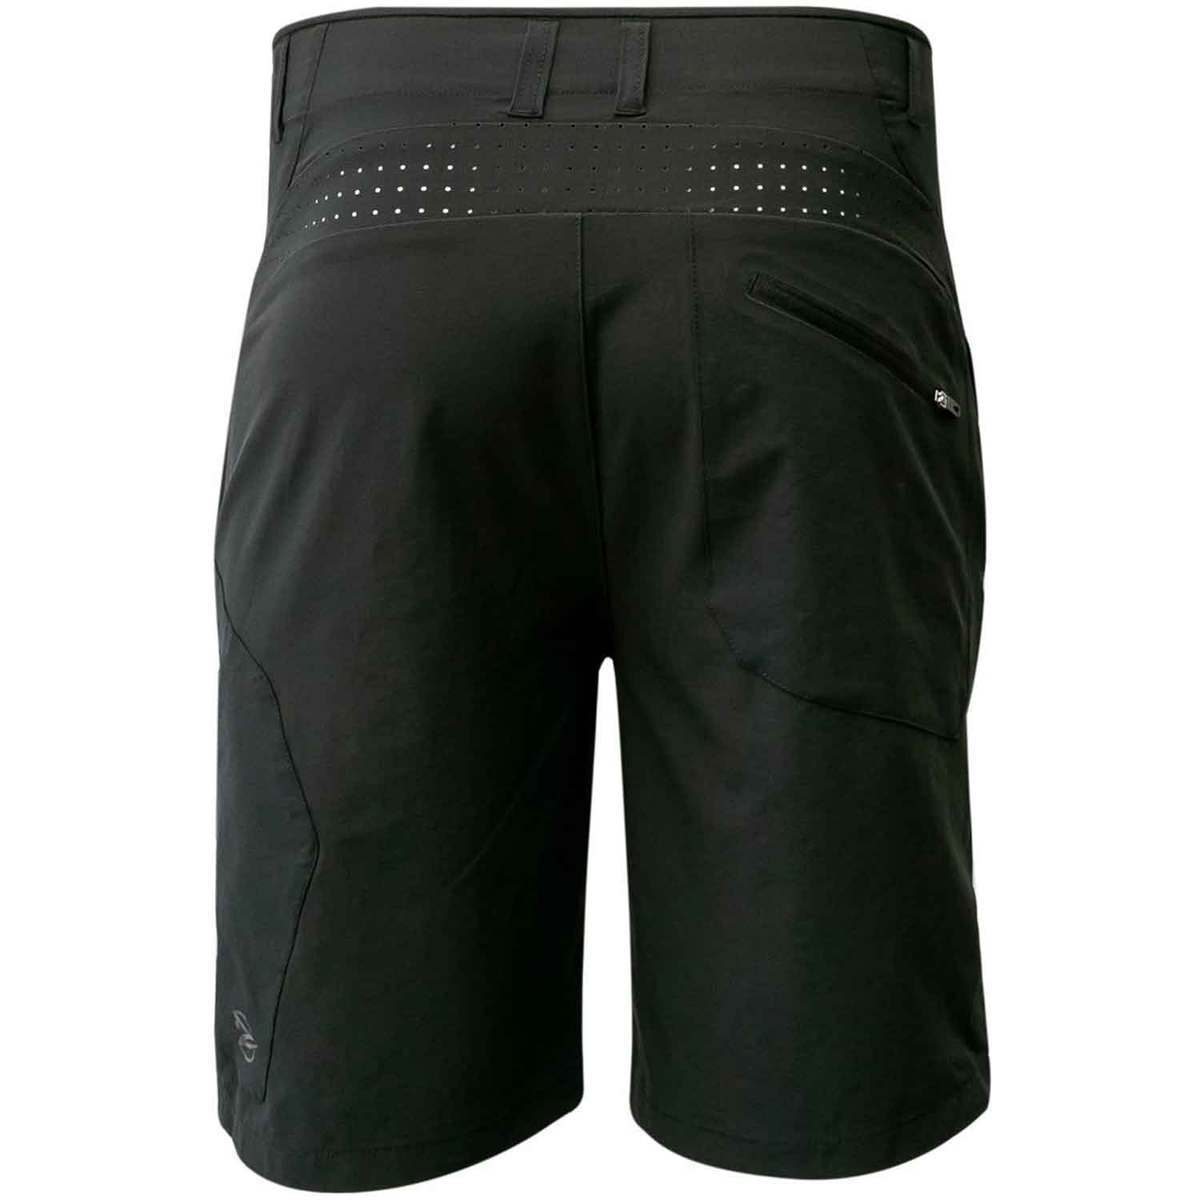 Gillz Men's Extreme Bonded Fishing Shorts - Black Abyss - M - Black ...